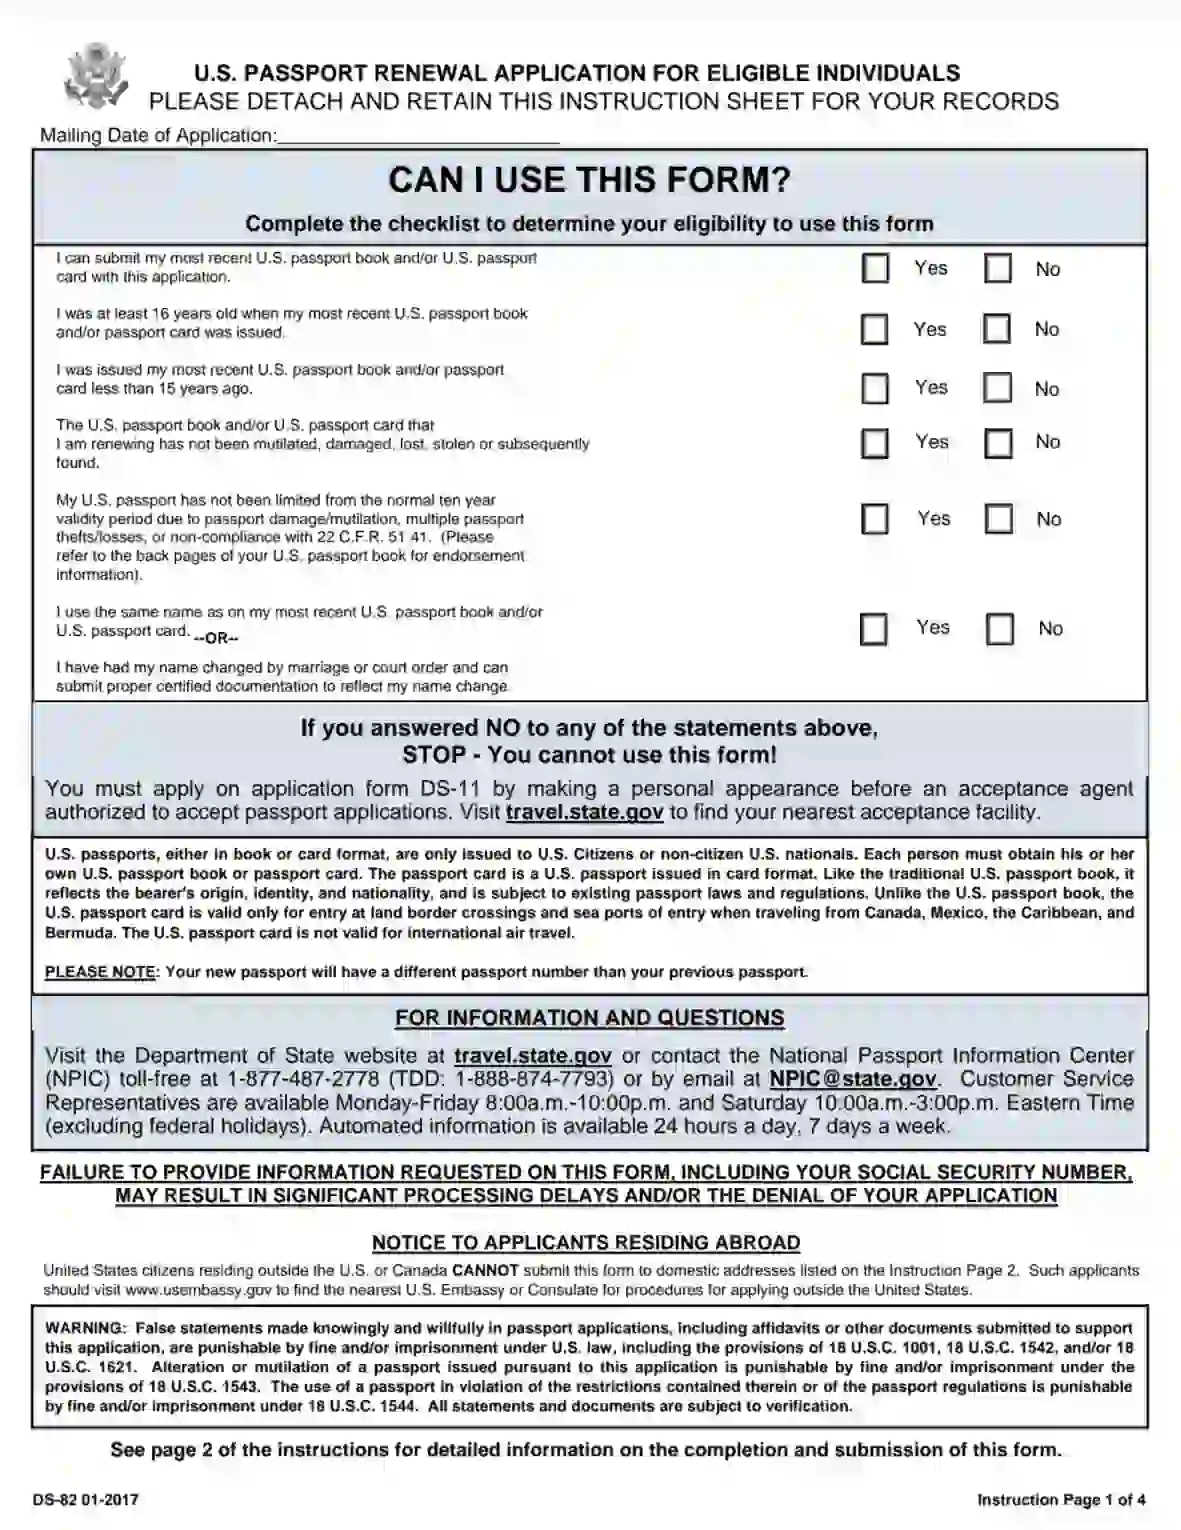 form ds-82. us passport renewal application